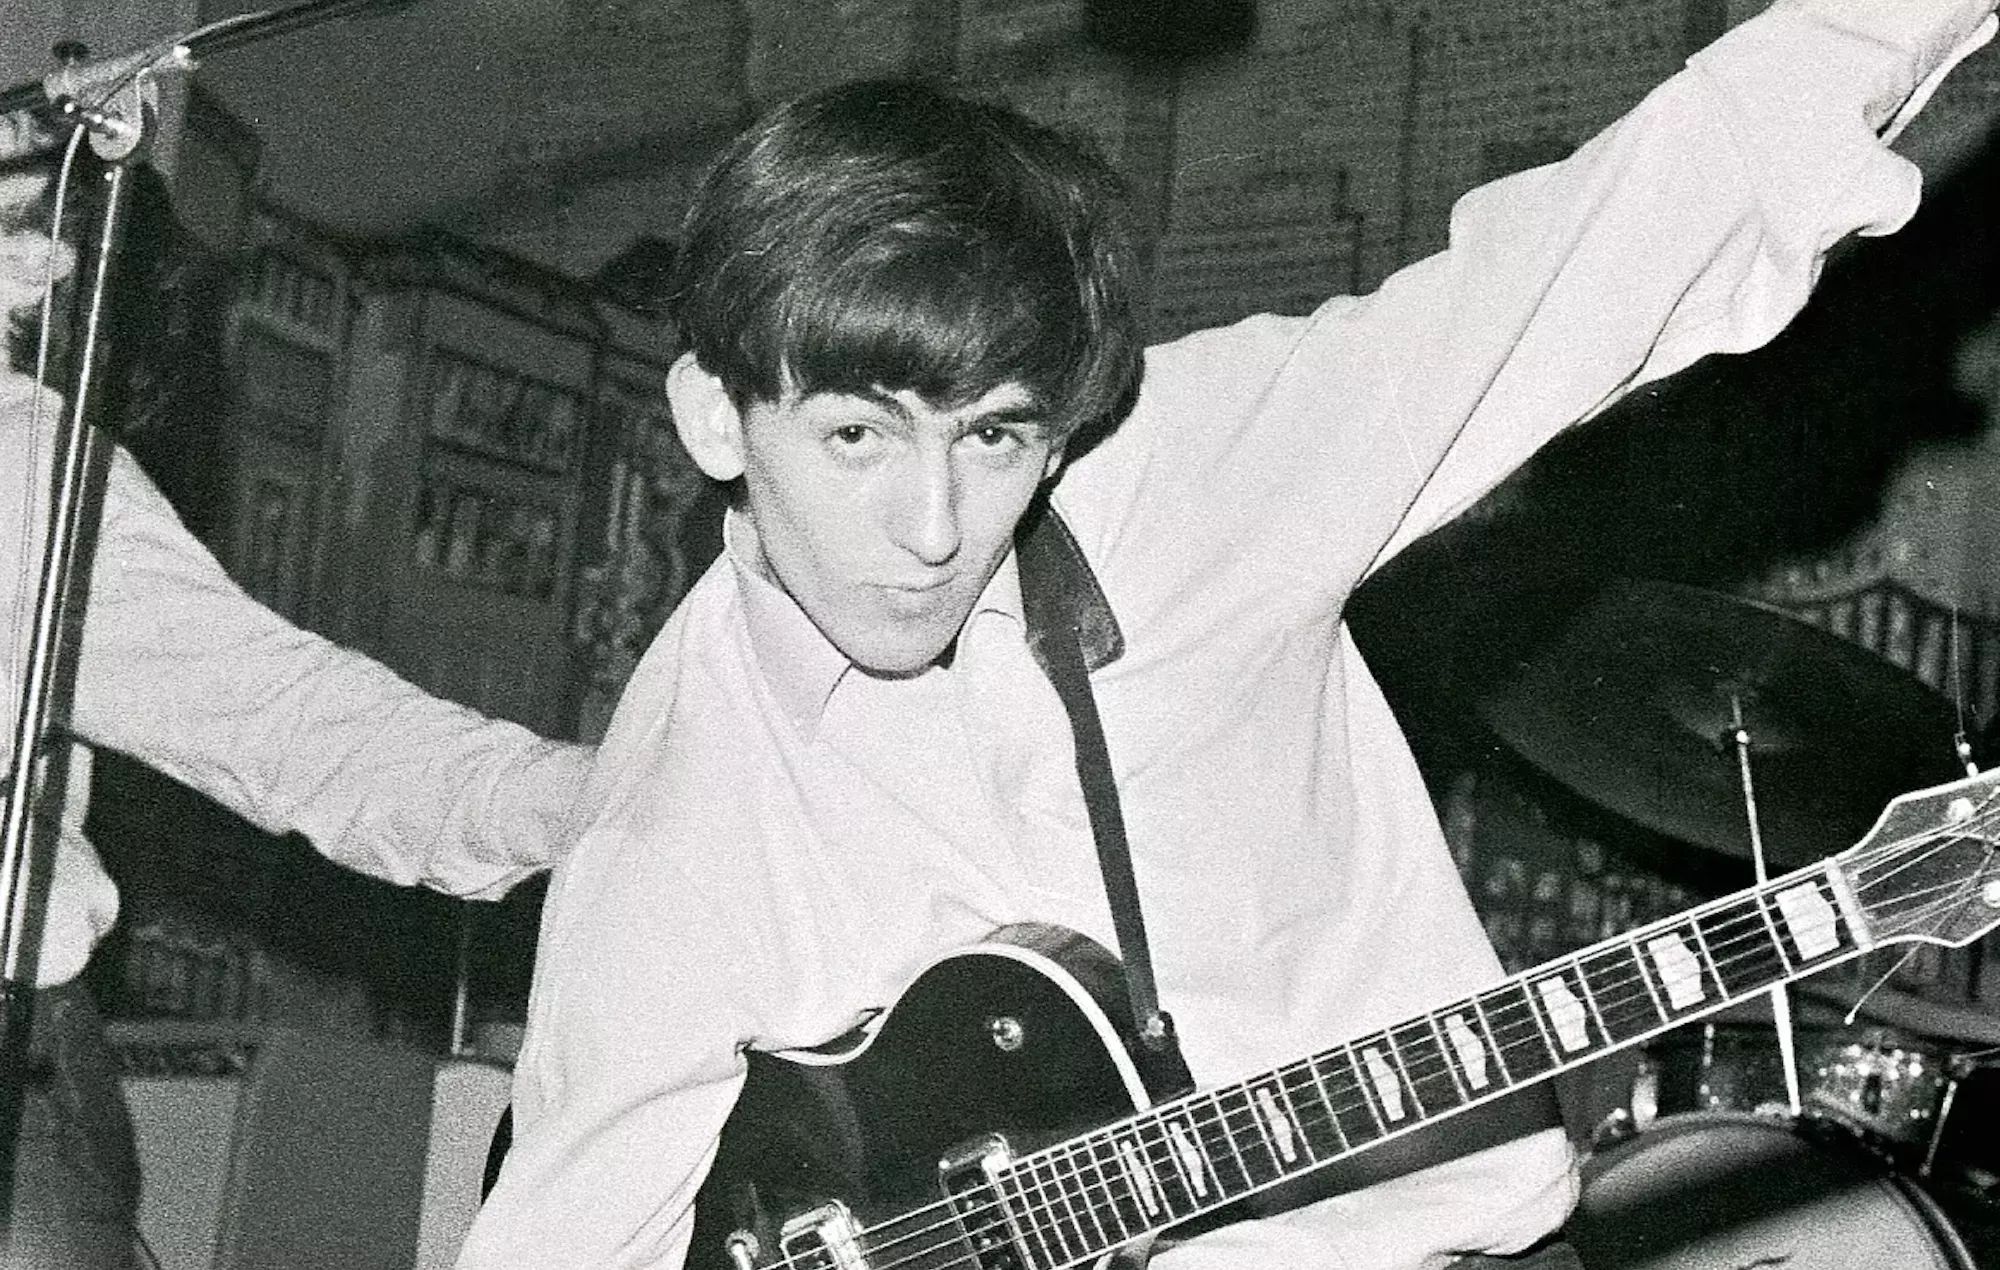 La casa de la infancia de George Harrison en Liverpool sale a subasta